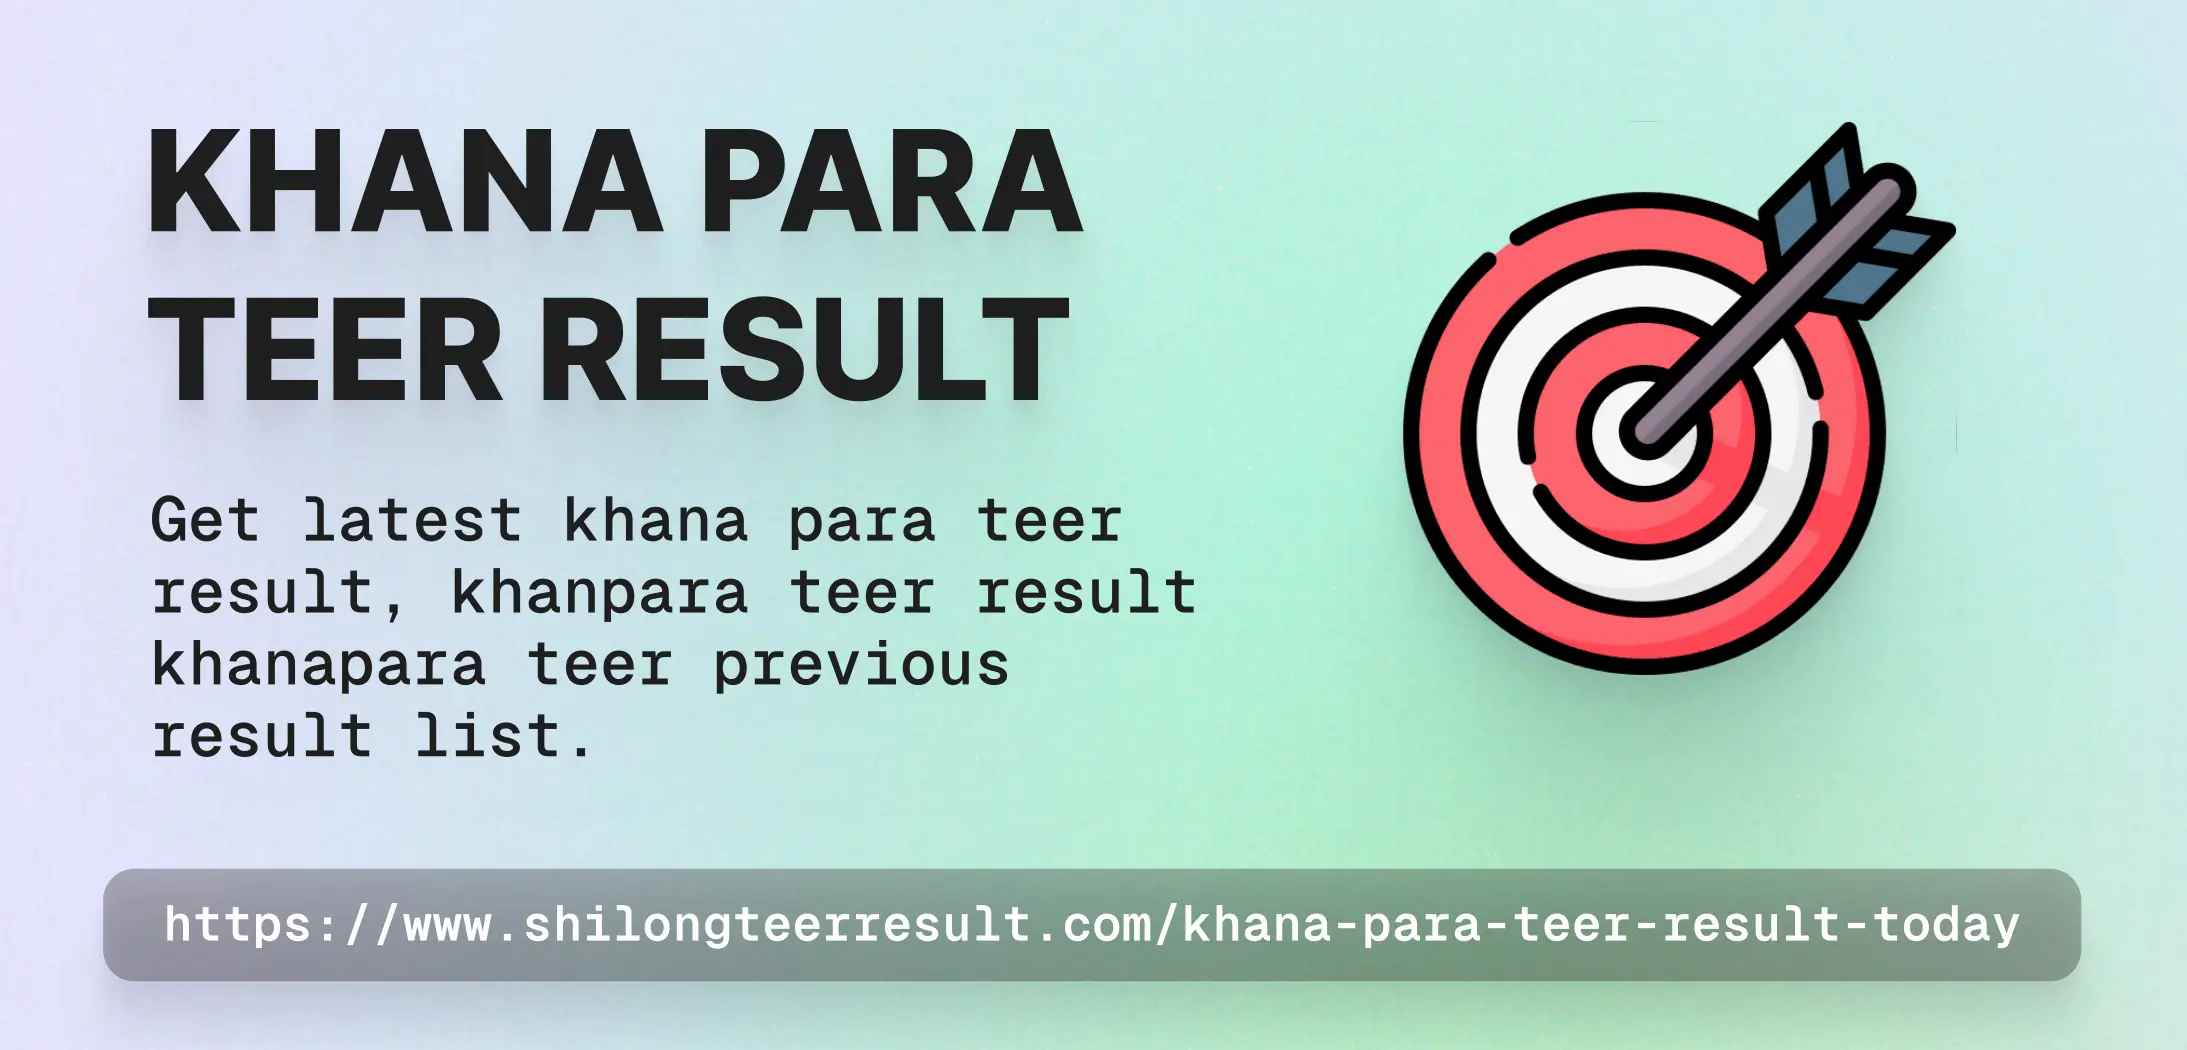 khana para teer result cover image